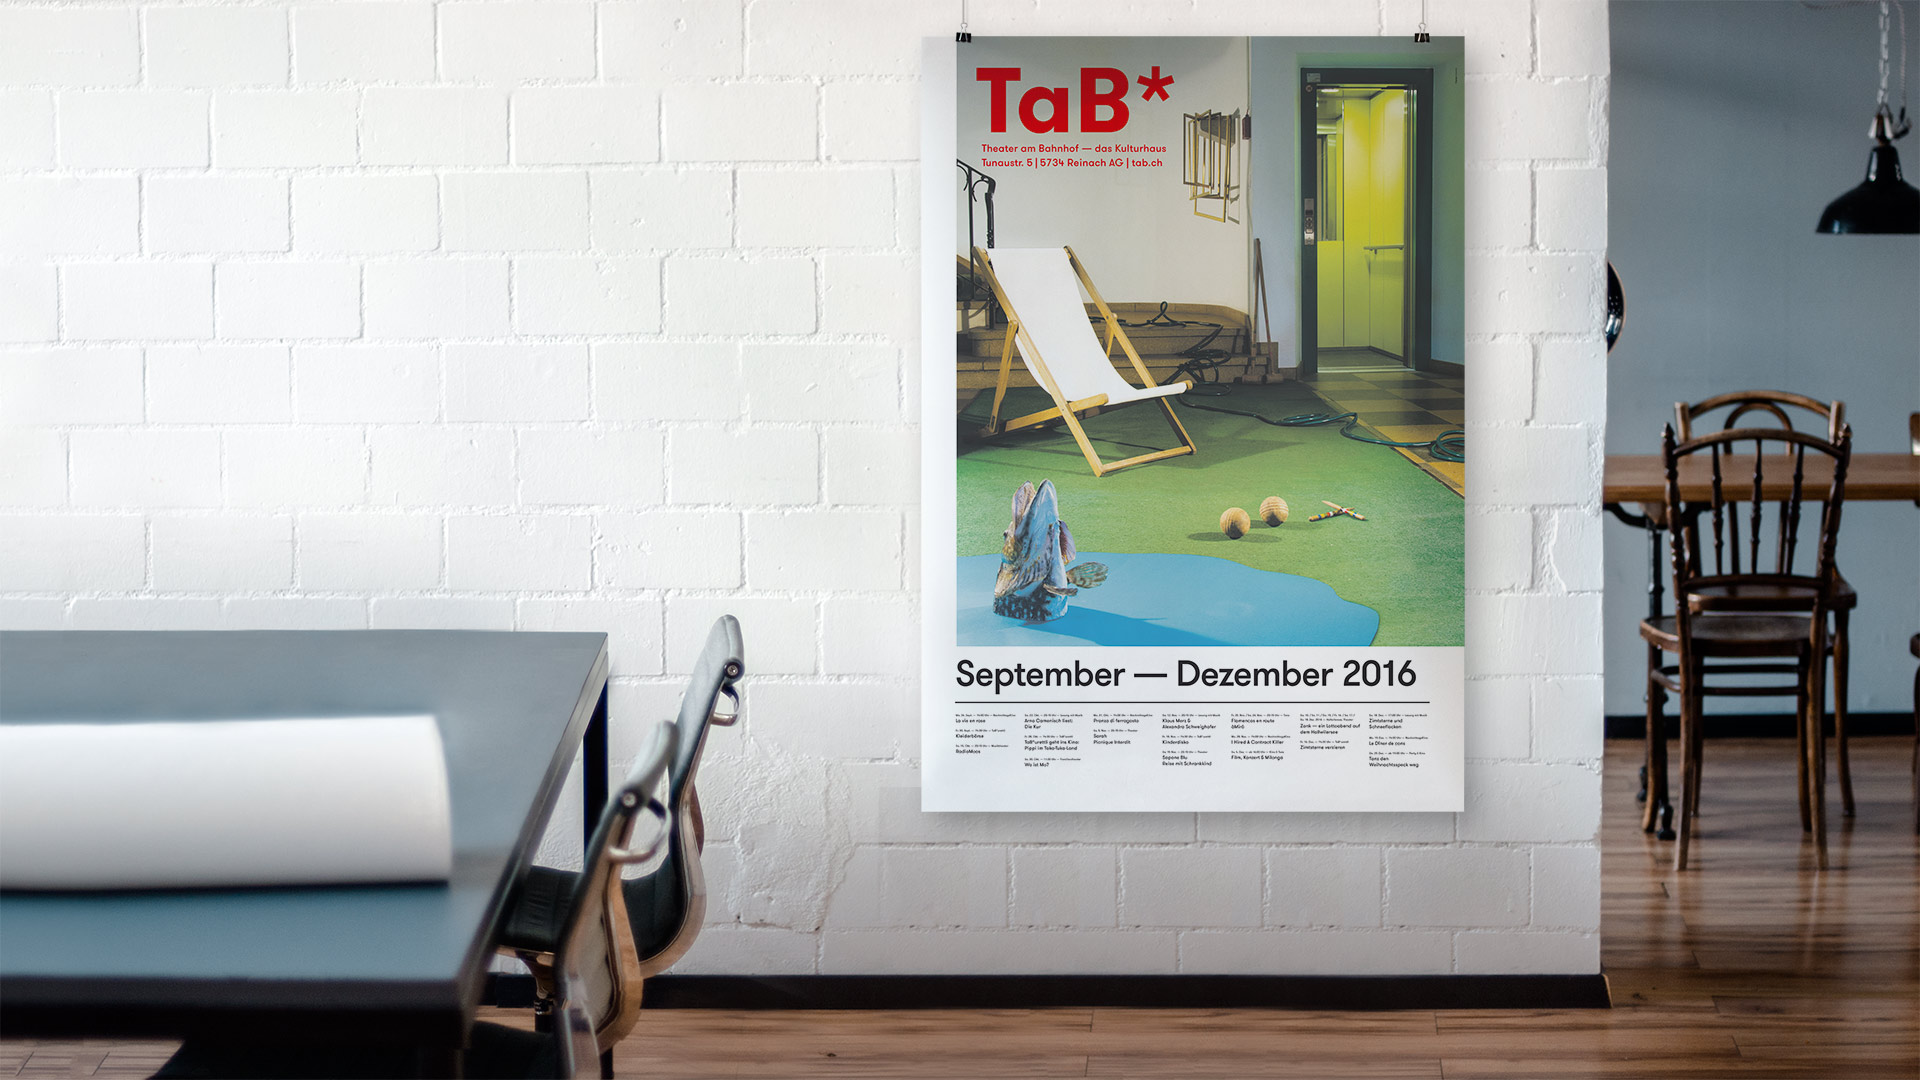 l’équipe [visuelle] – TaB* Theater am Bahnhof – Programmzeitung, Corporate Design, Plakate, Flyer, Kultur